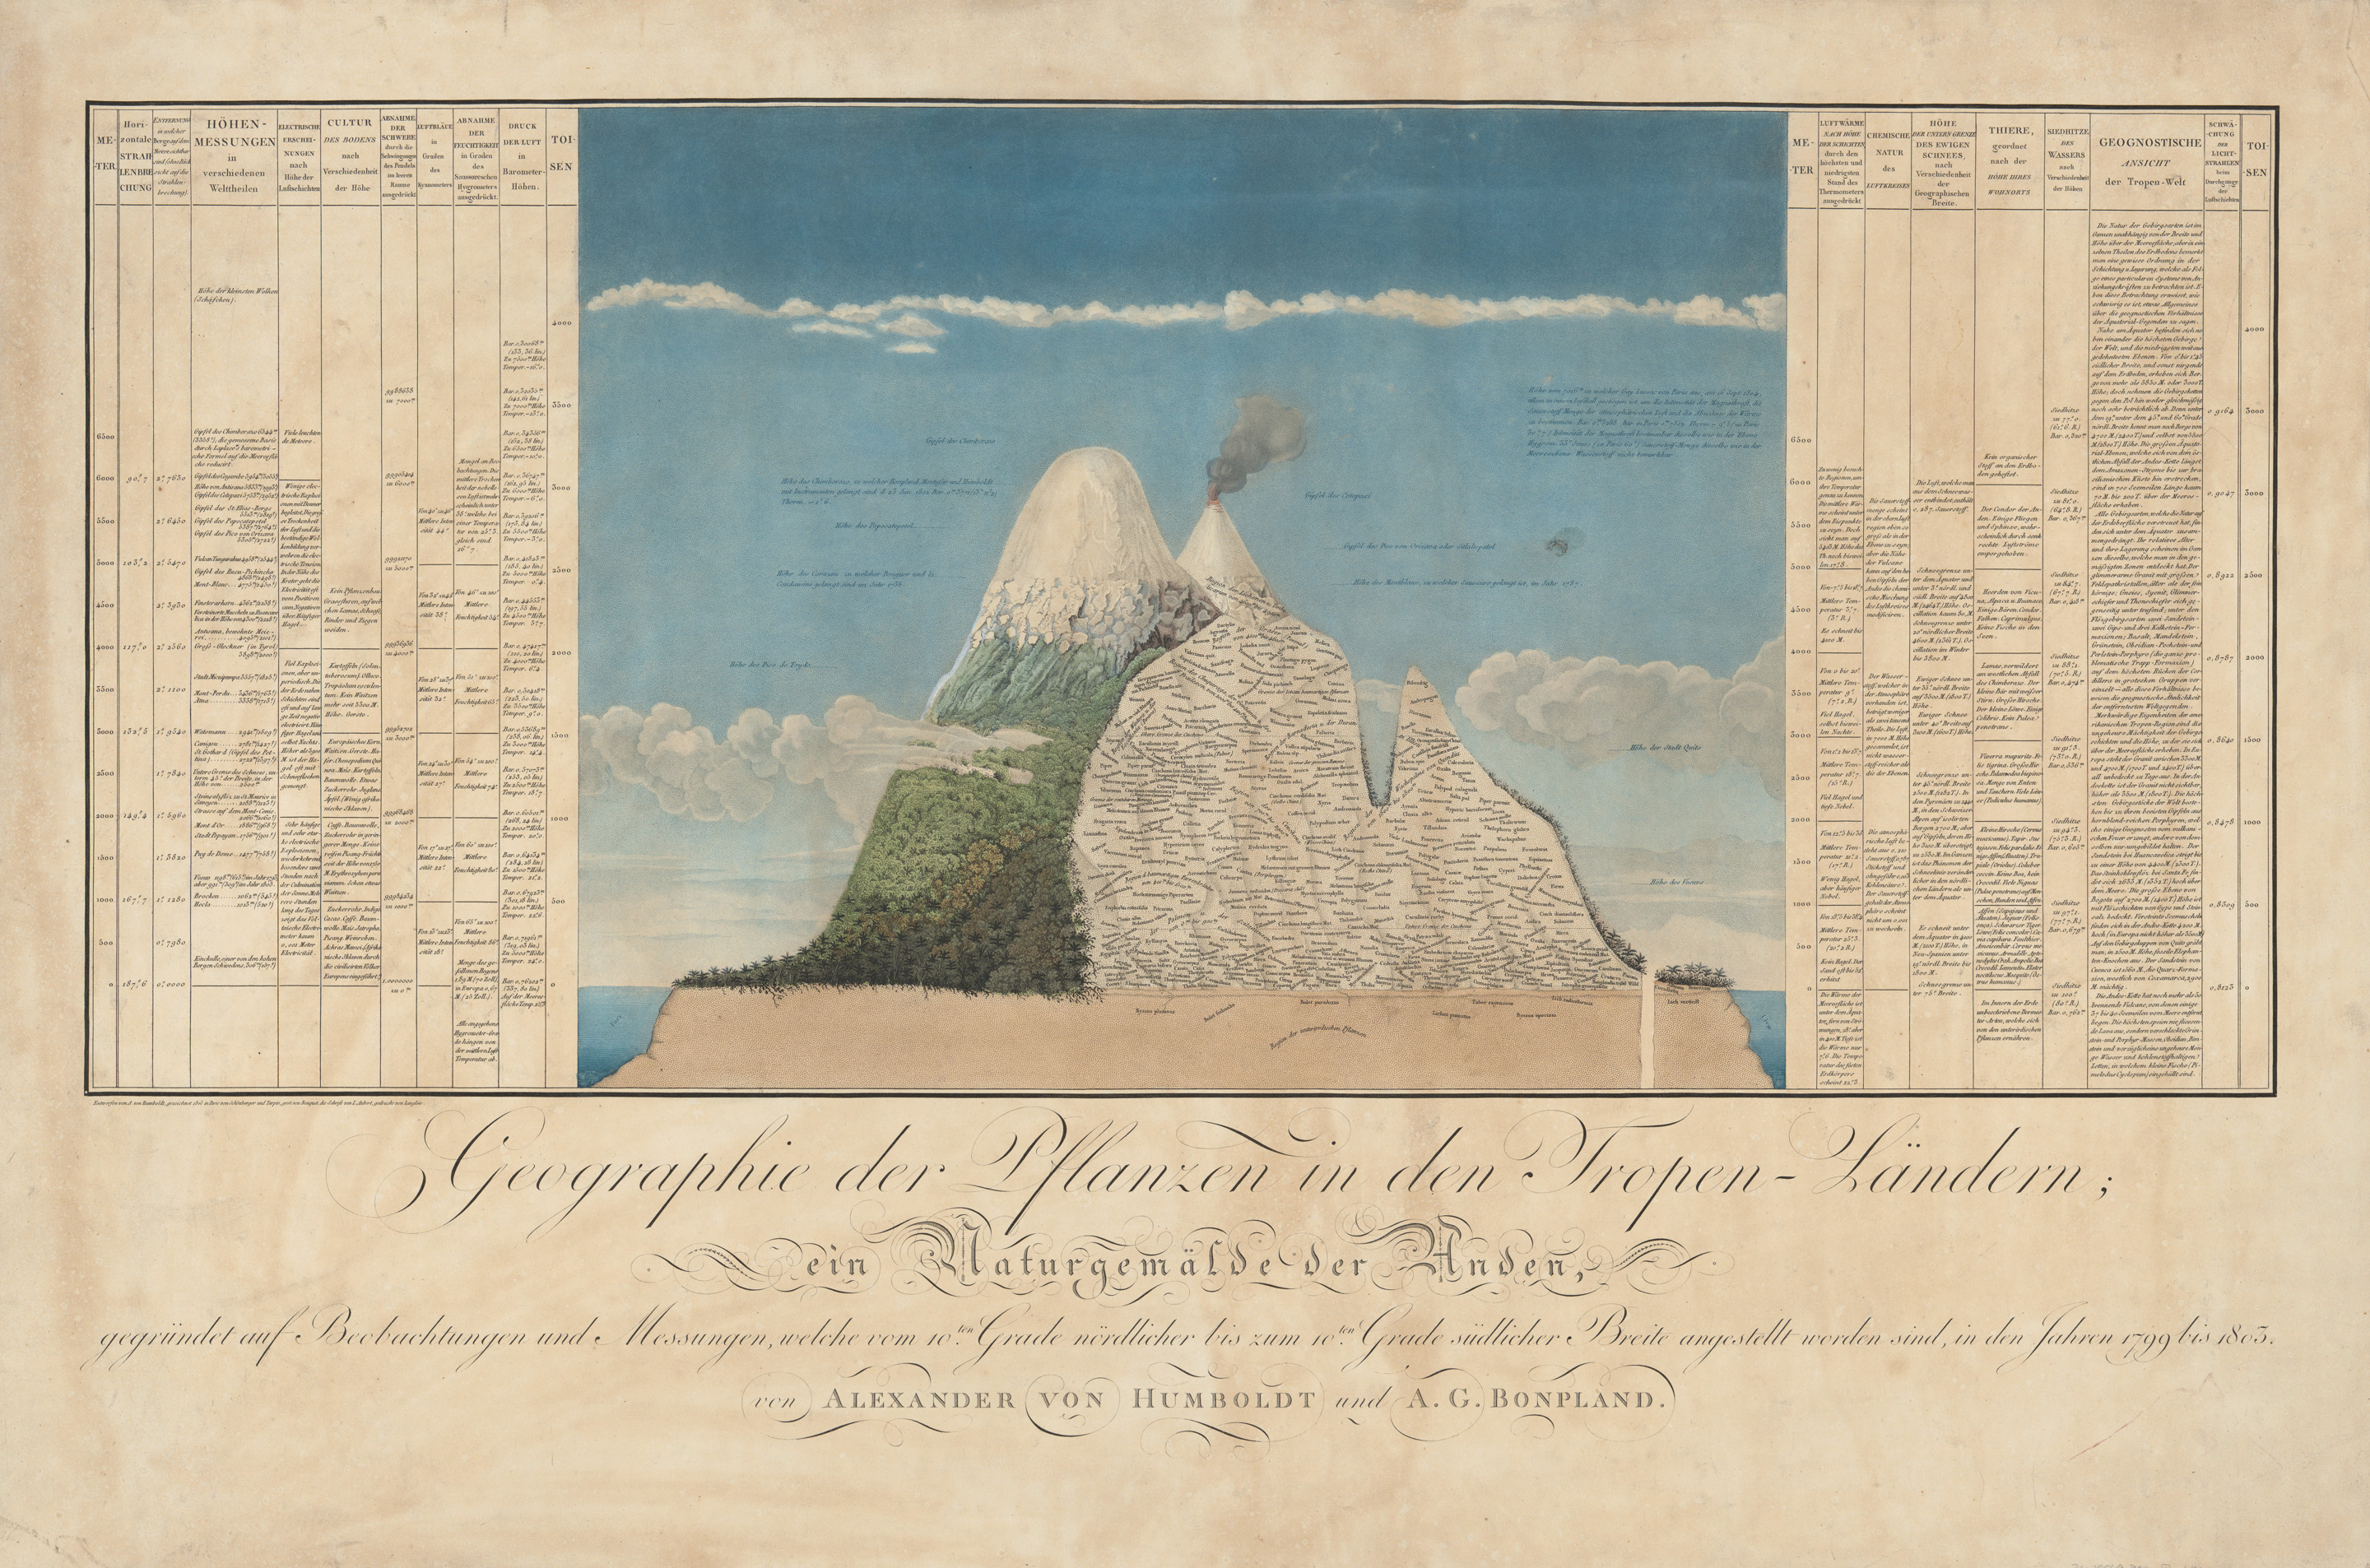 Alexander von Humboldt and AimÉ Bonpland’s cross section of Chimborazo and Cotopaxi